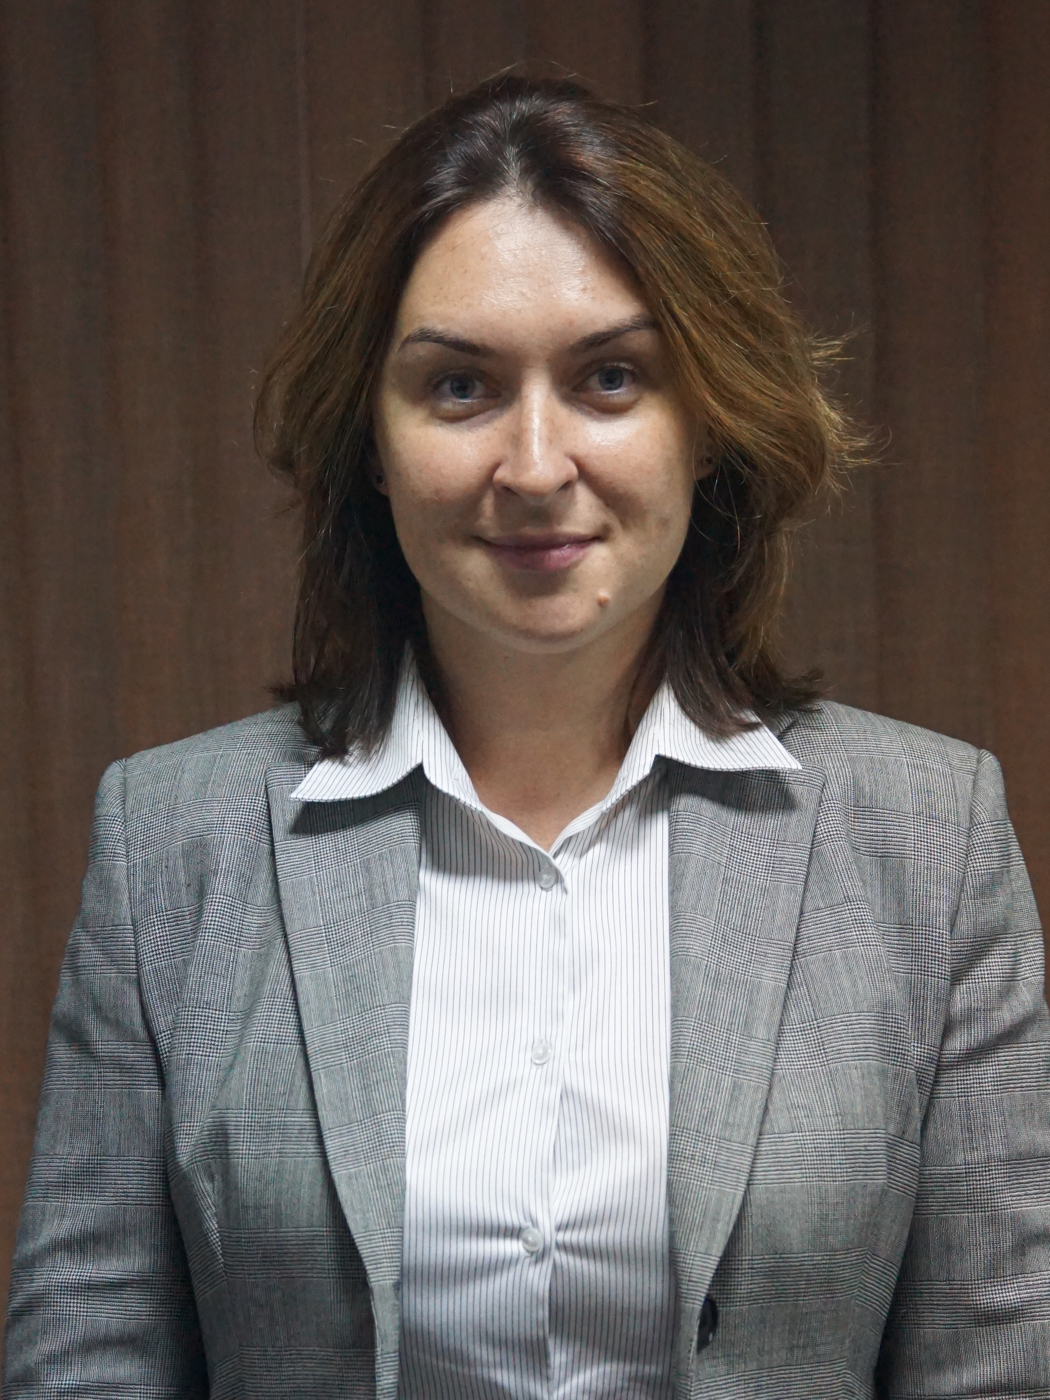 Никулина Светлана Владимировна — Директор Департамента стратегического развития и маркетинга Банк SIAB